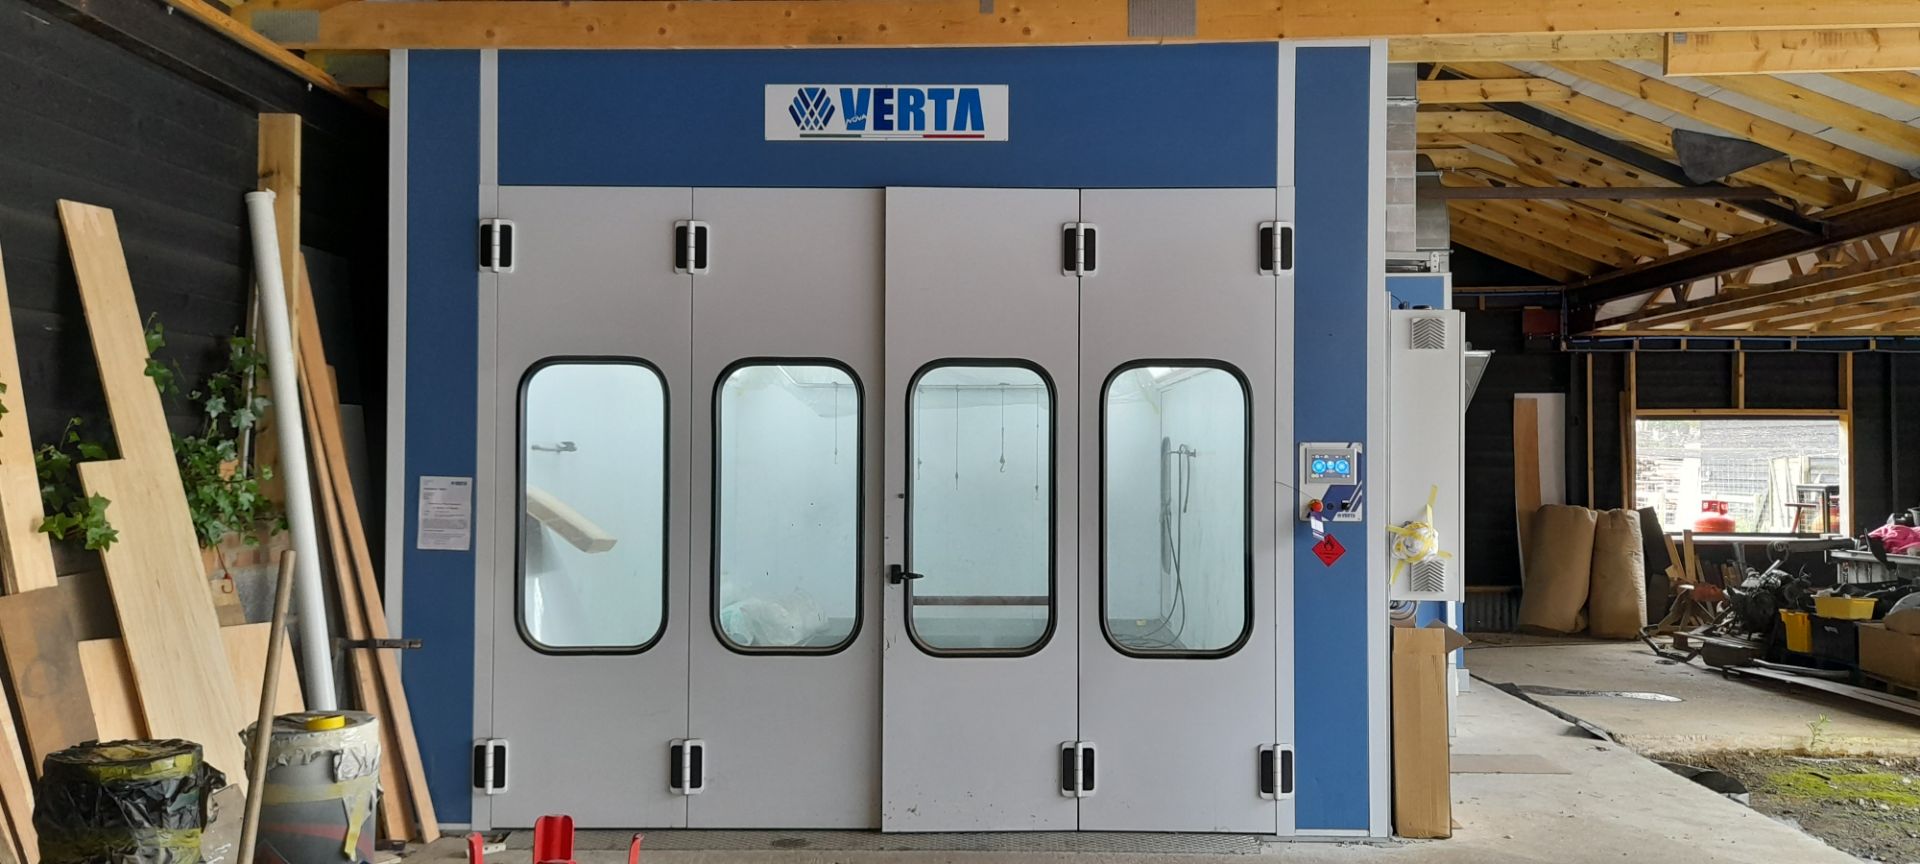 Verta Nova Conquer Fair Door Spray Booth. 3.96m wide, 5.94m deep & 2.14m high. With underfloor - Image 2 of 24